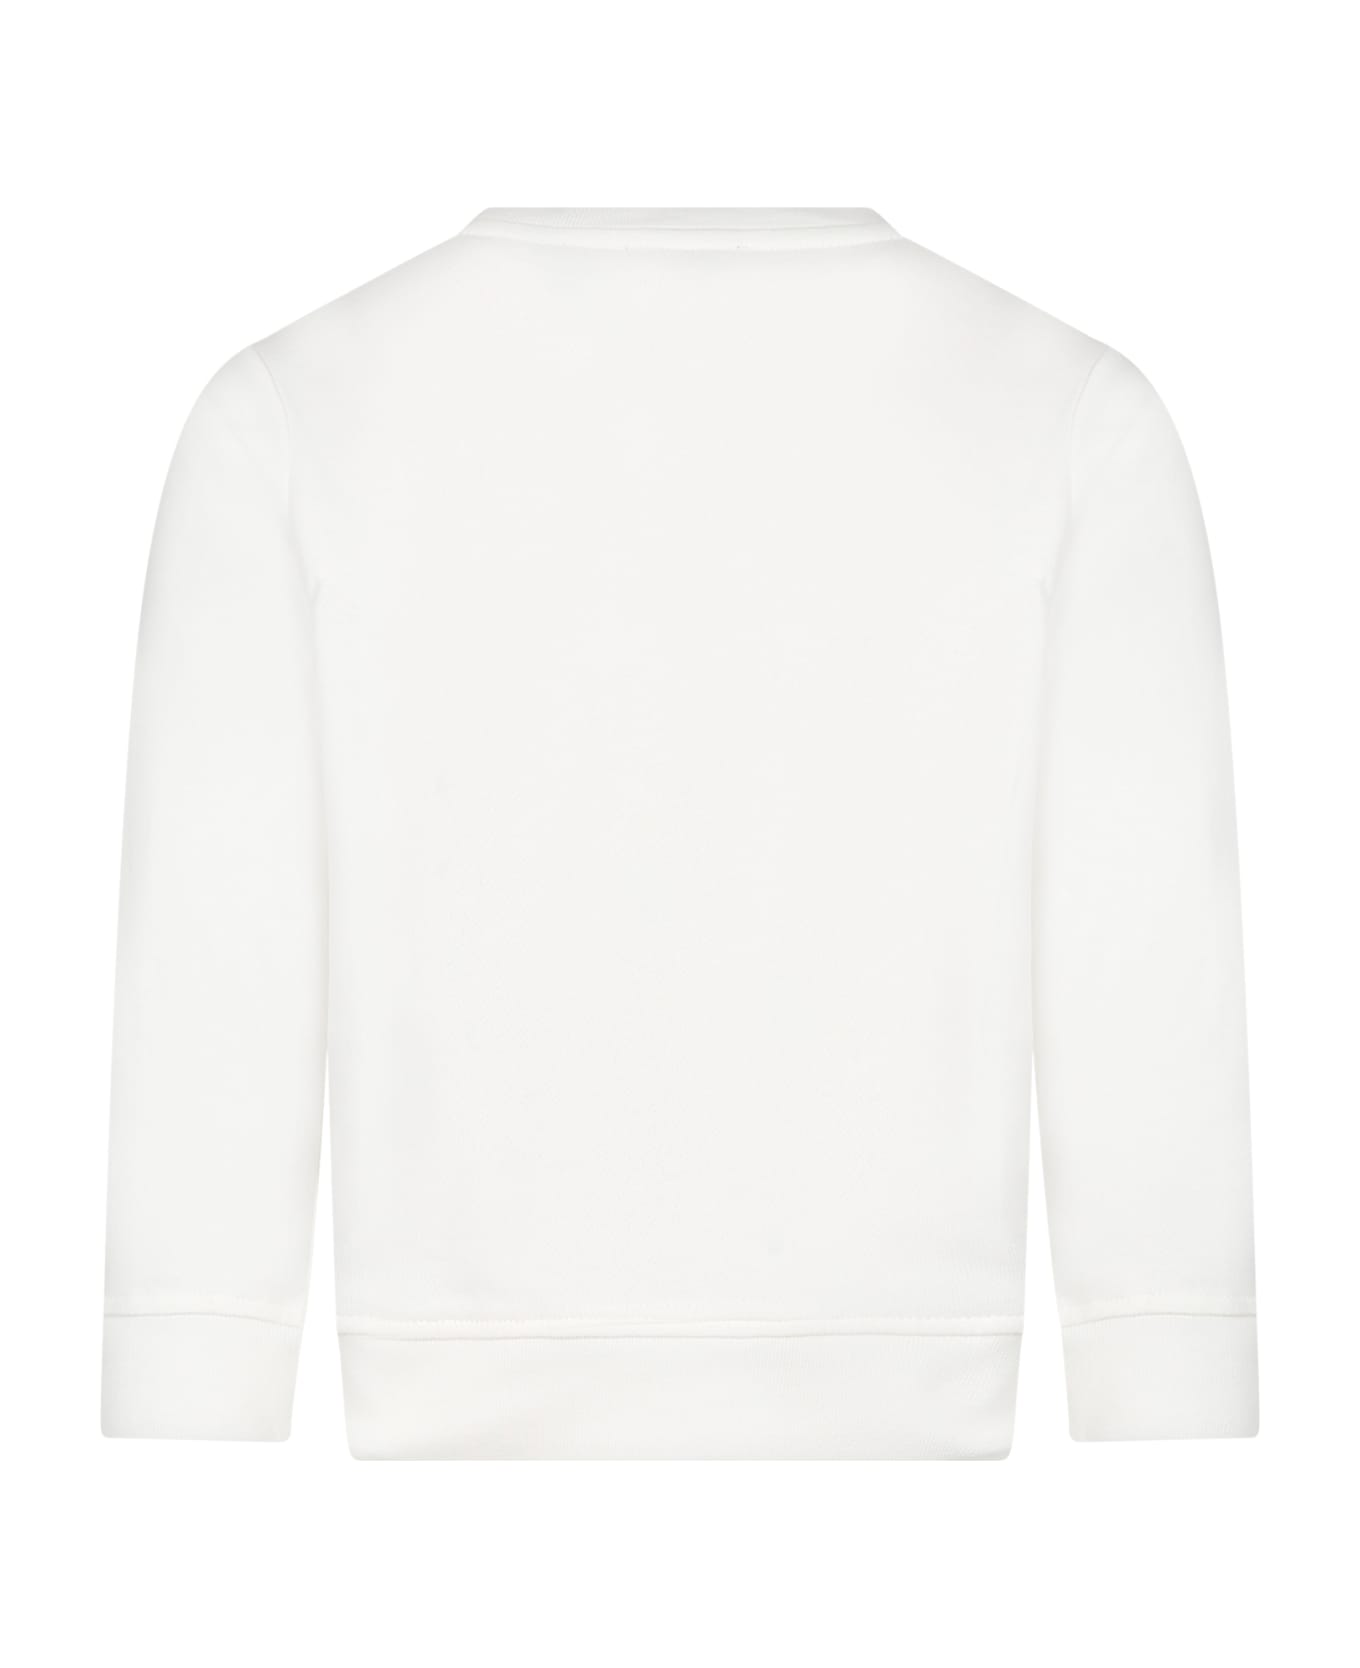 Stella McCartney Kids White Sweatshirt For Boy With Print - White